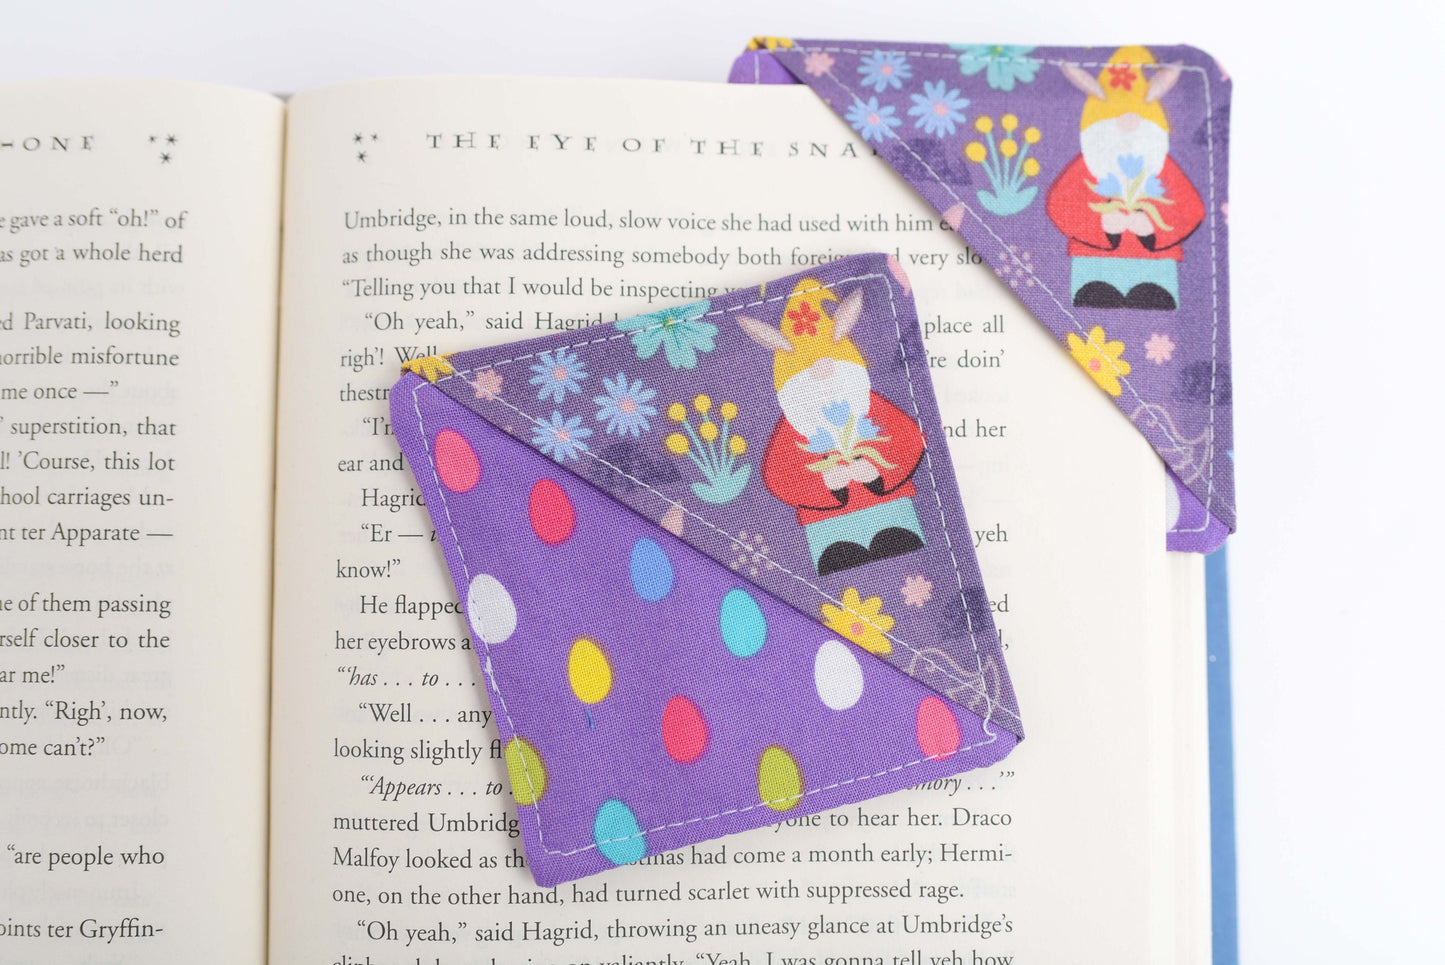 Purple Gnome & Easter Egg Handmade Fabric Corner Bookmark